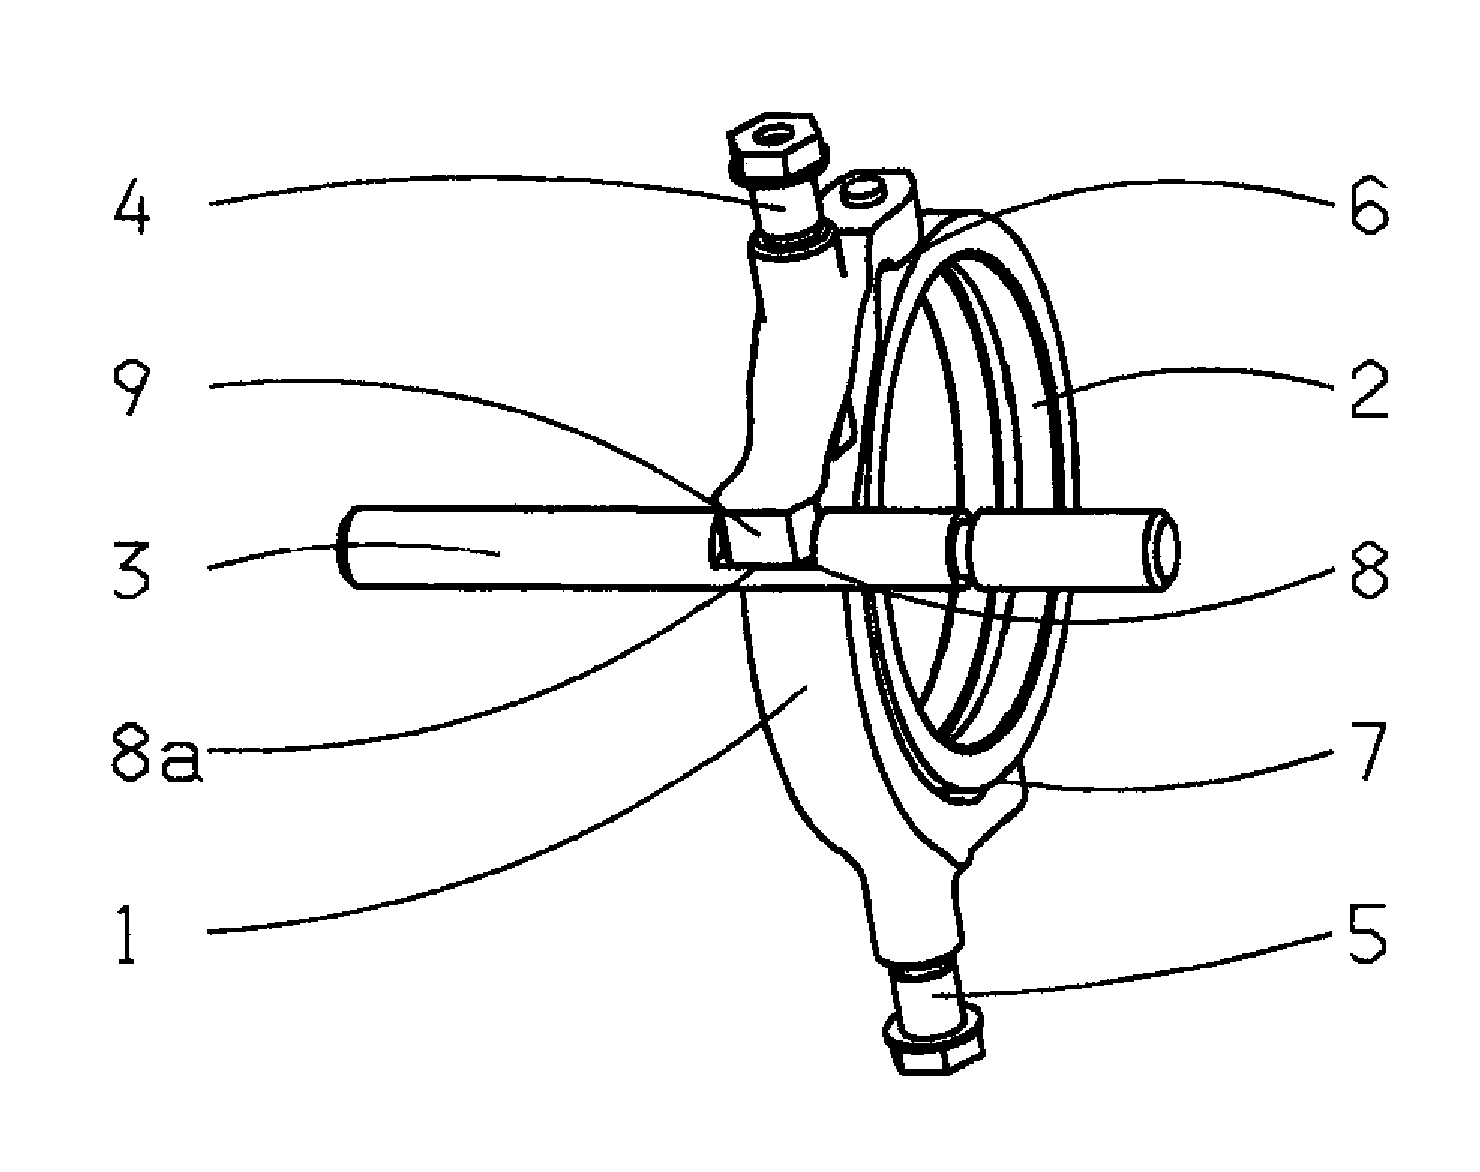 Arrangement of a gear shift fork in a transmission